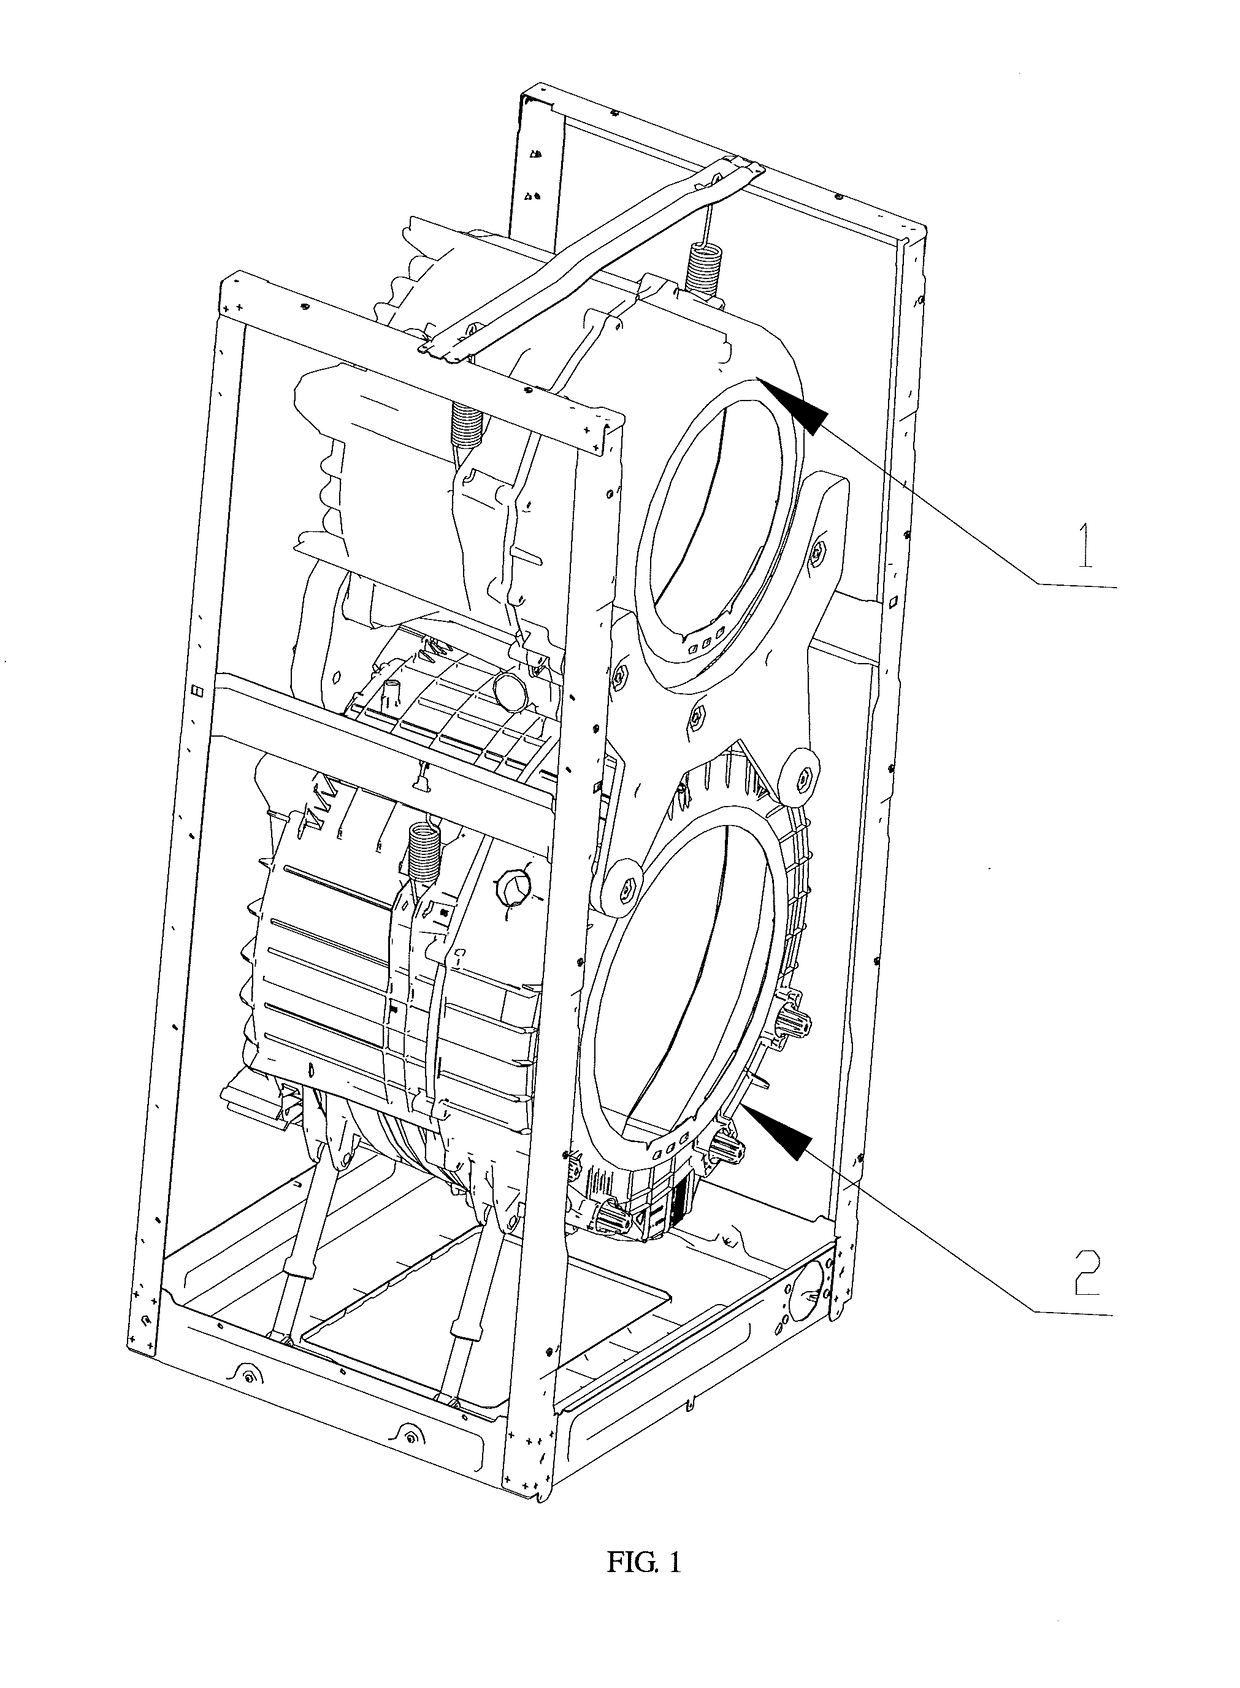 A heating control method of a multi-drum washing machine